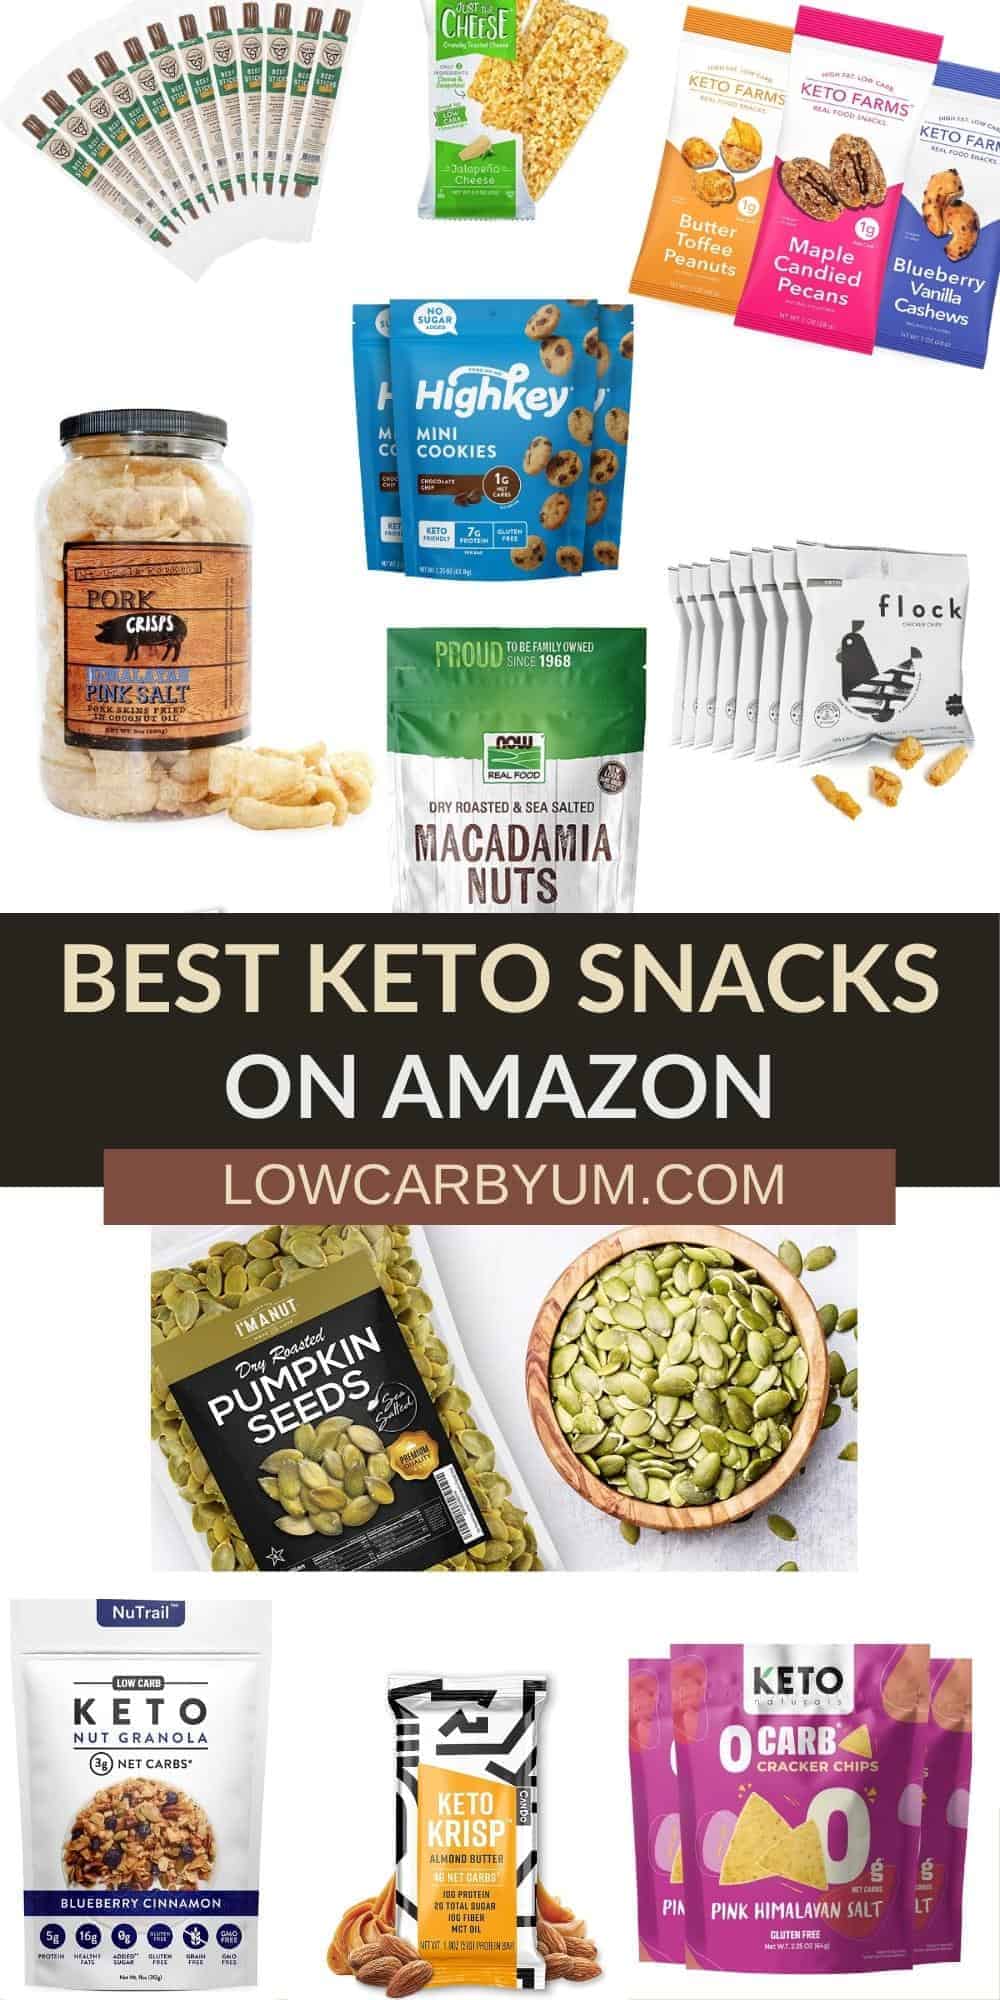 best keto snacks on amazon pinterest image.